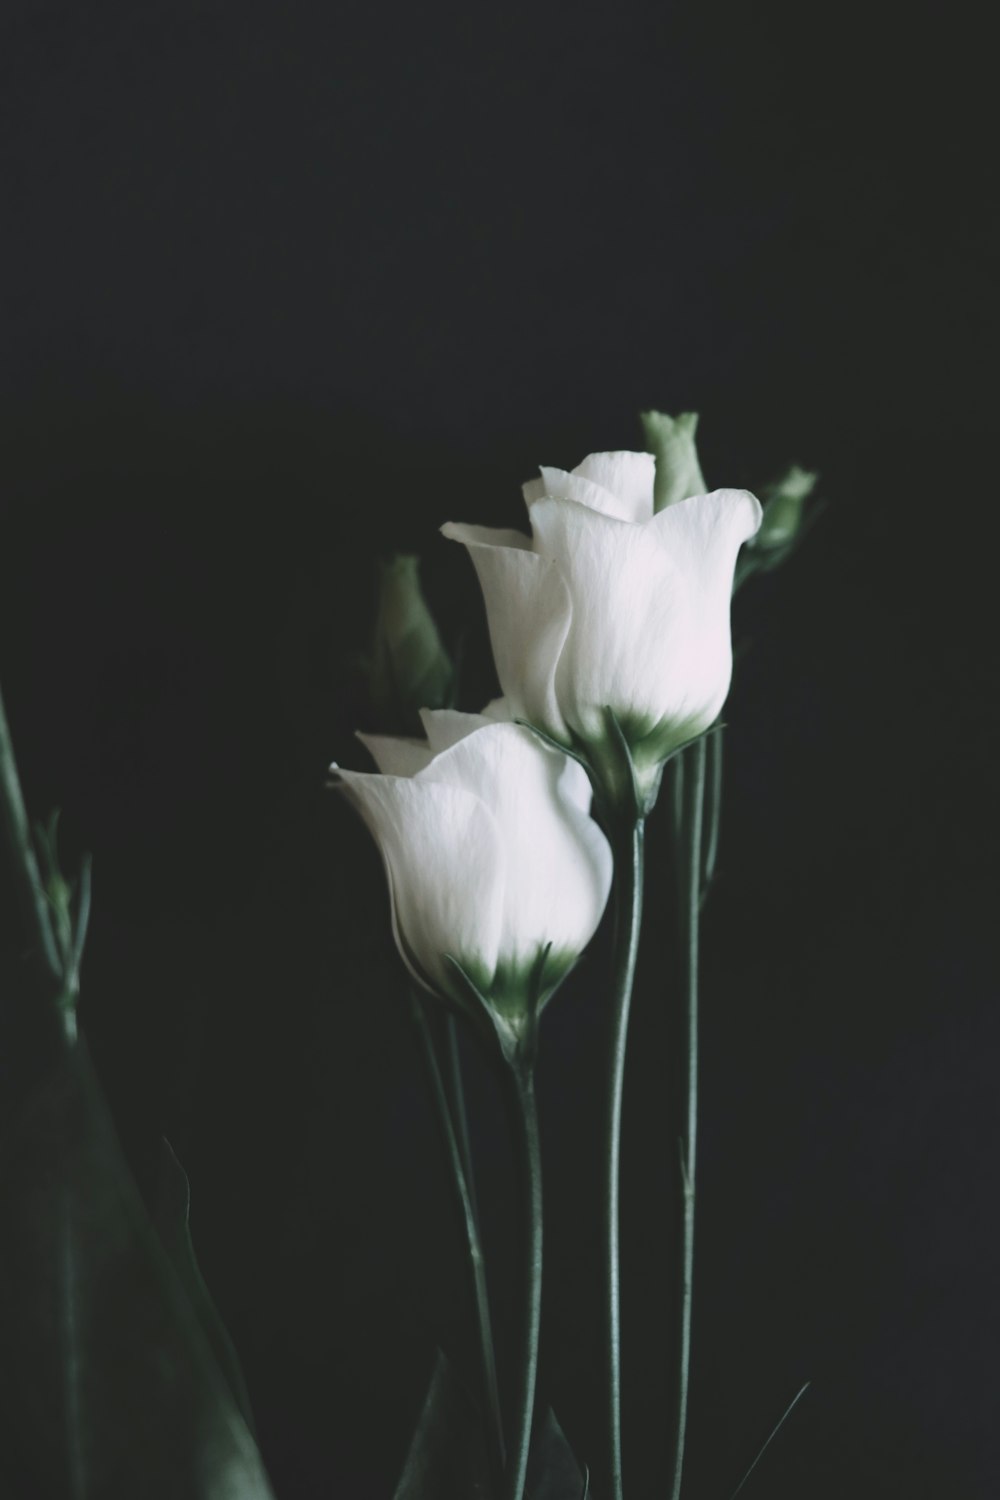 White flower in black background photo – Free Grey Image on Unsplash